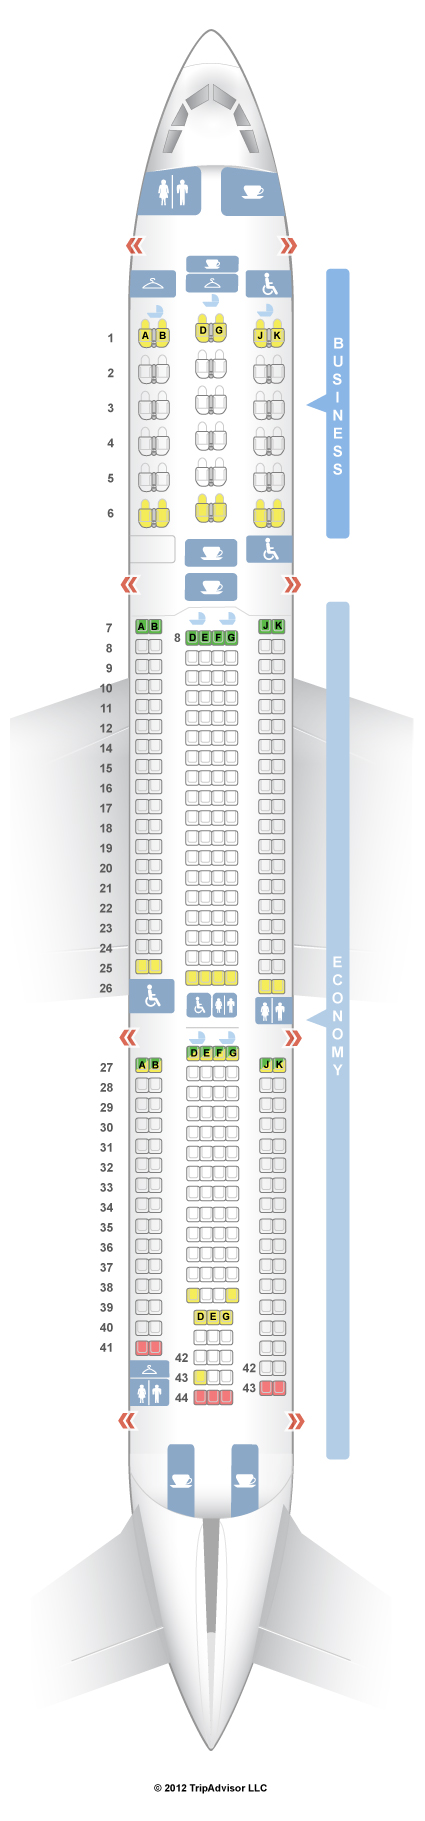 Cebu Pacific Airbus A330 Seating Chart